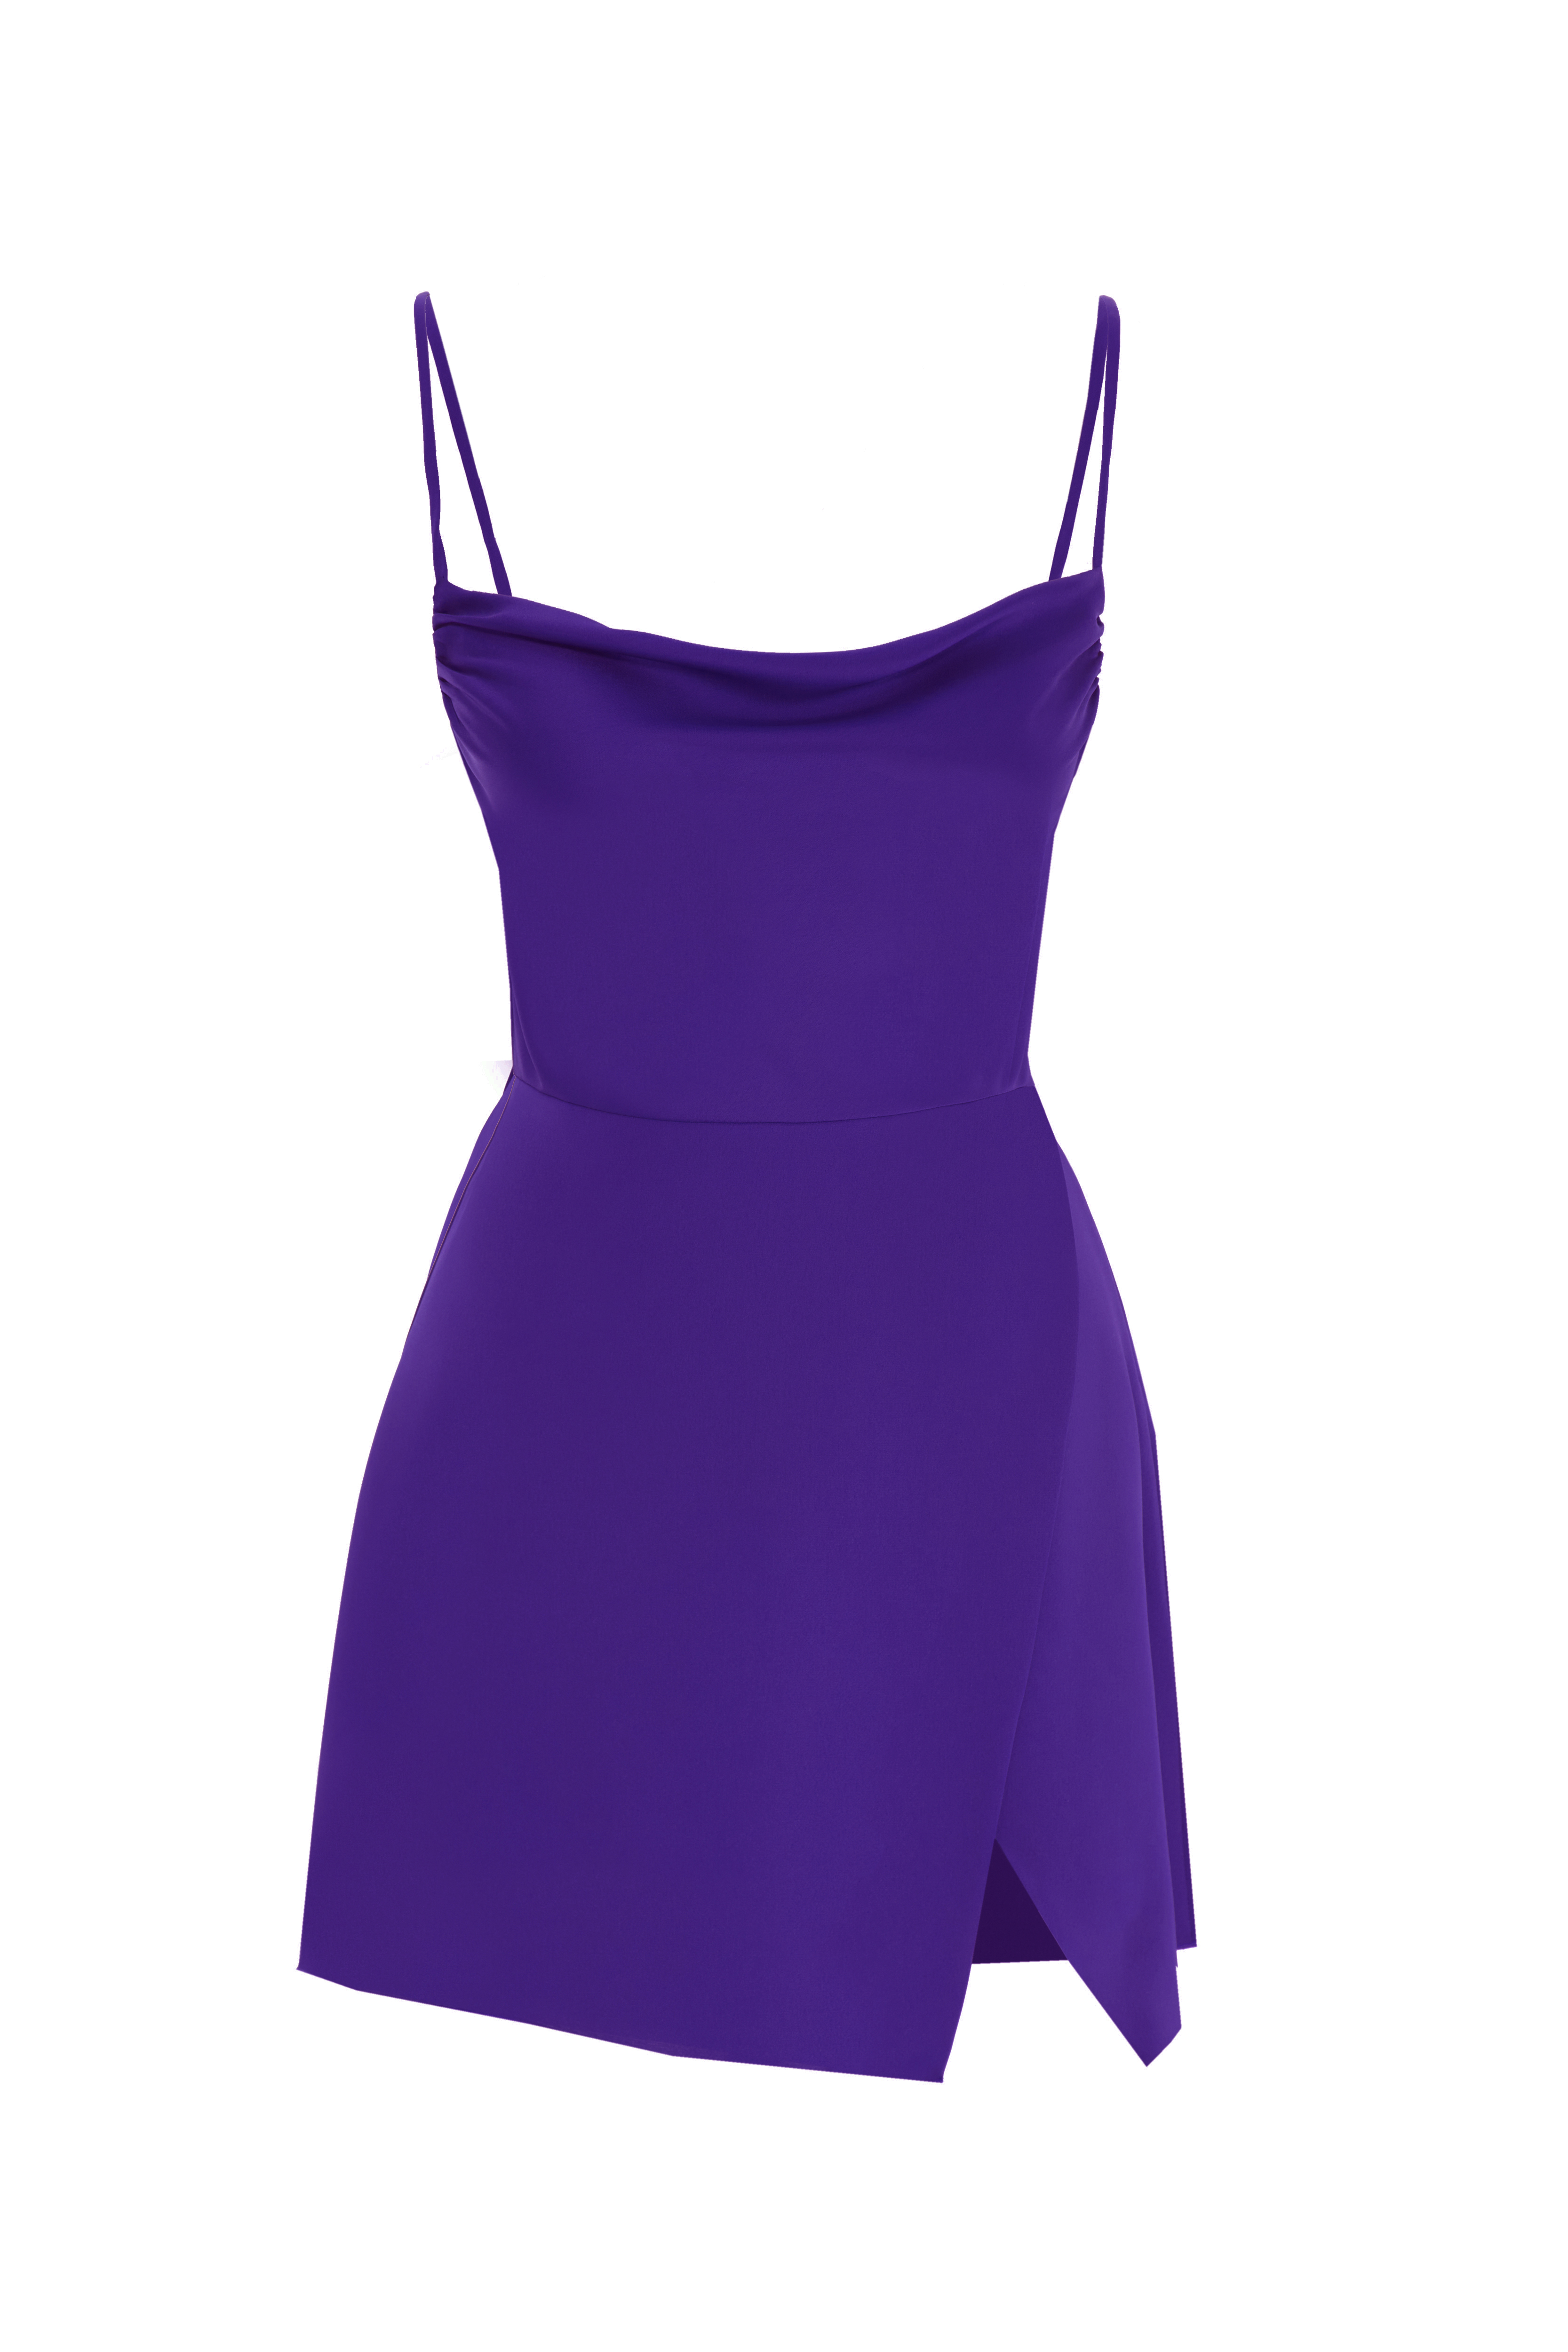 MAVES Plunging Collar Mini Satin Purple Dress